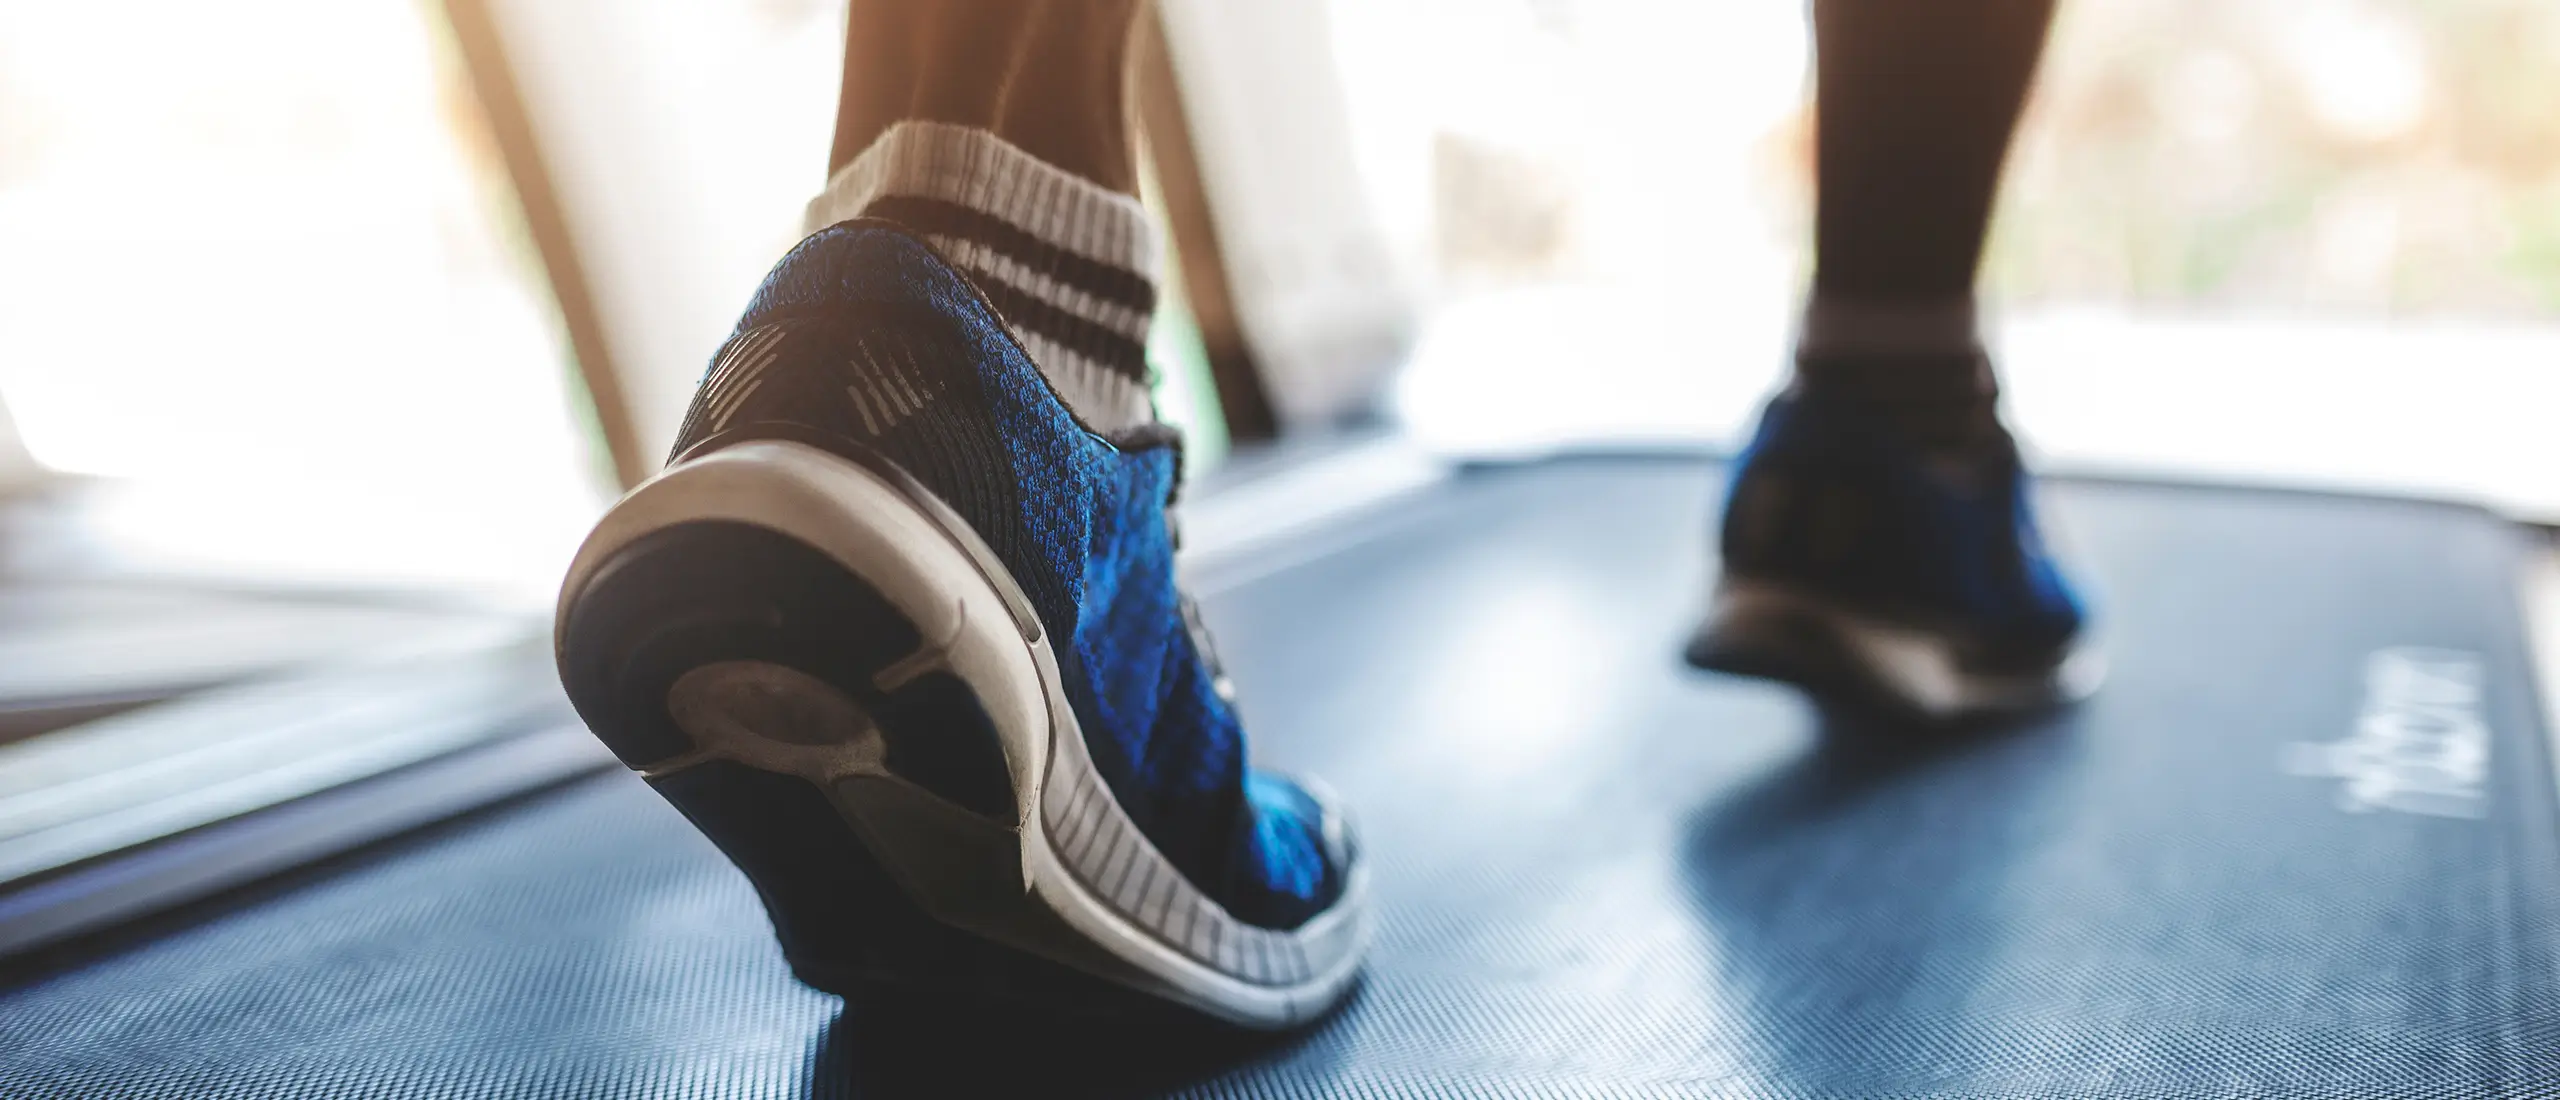 Feet in motion on a treadmill